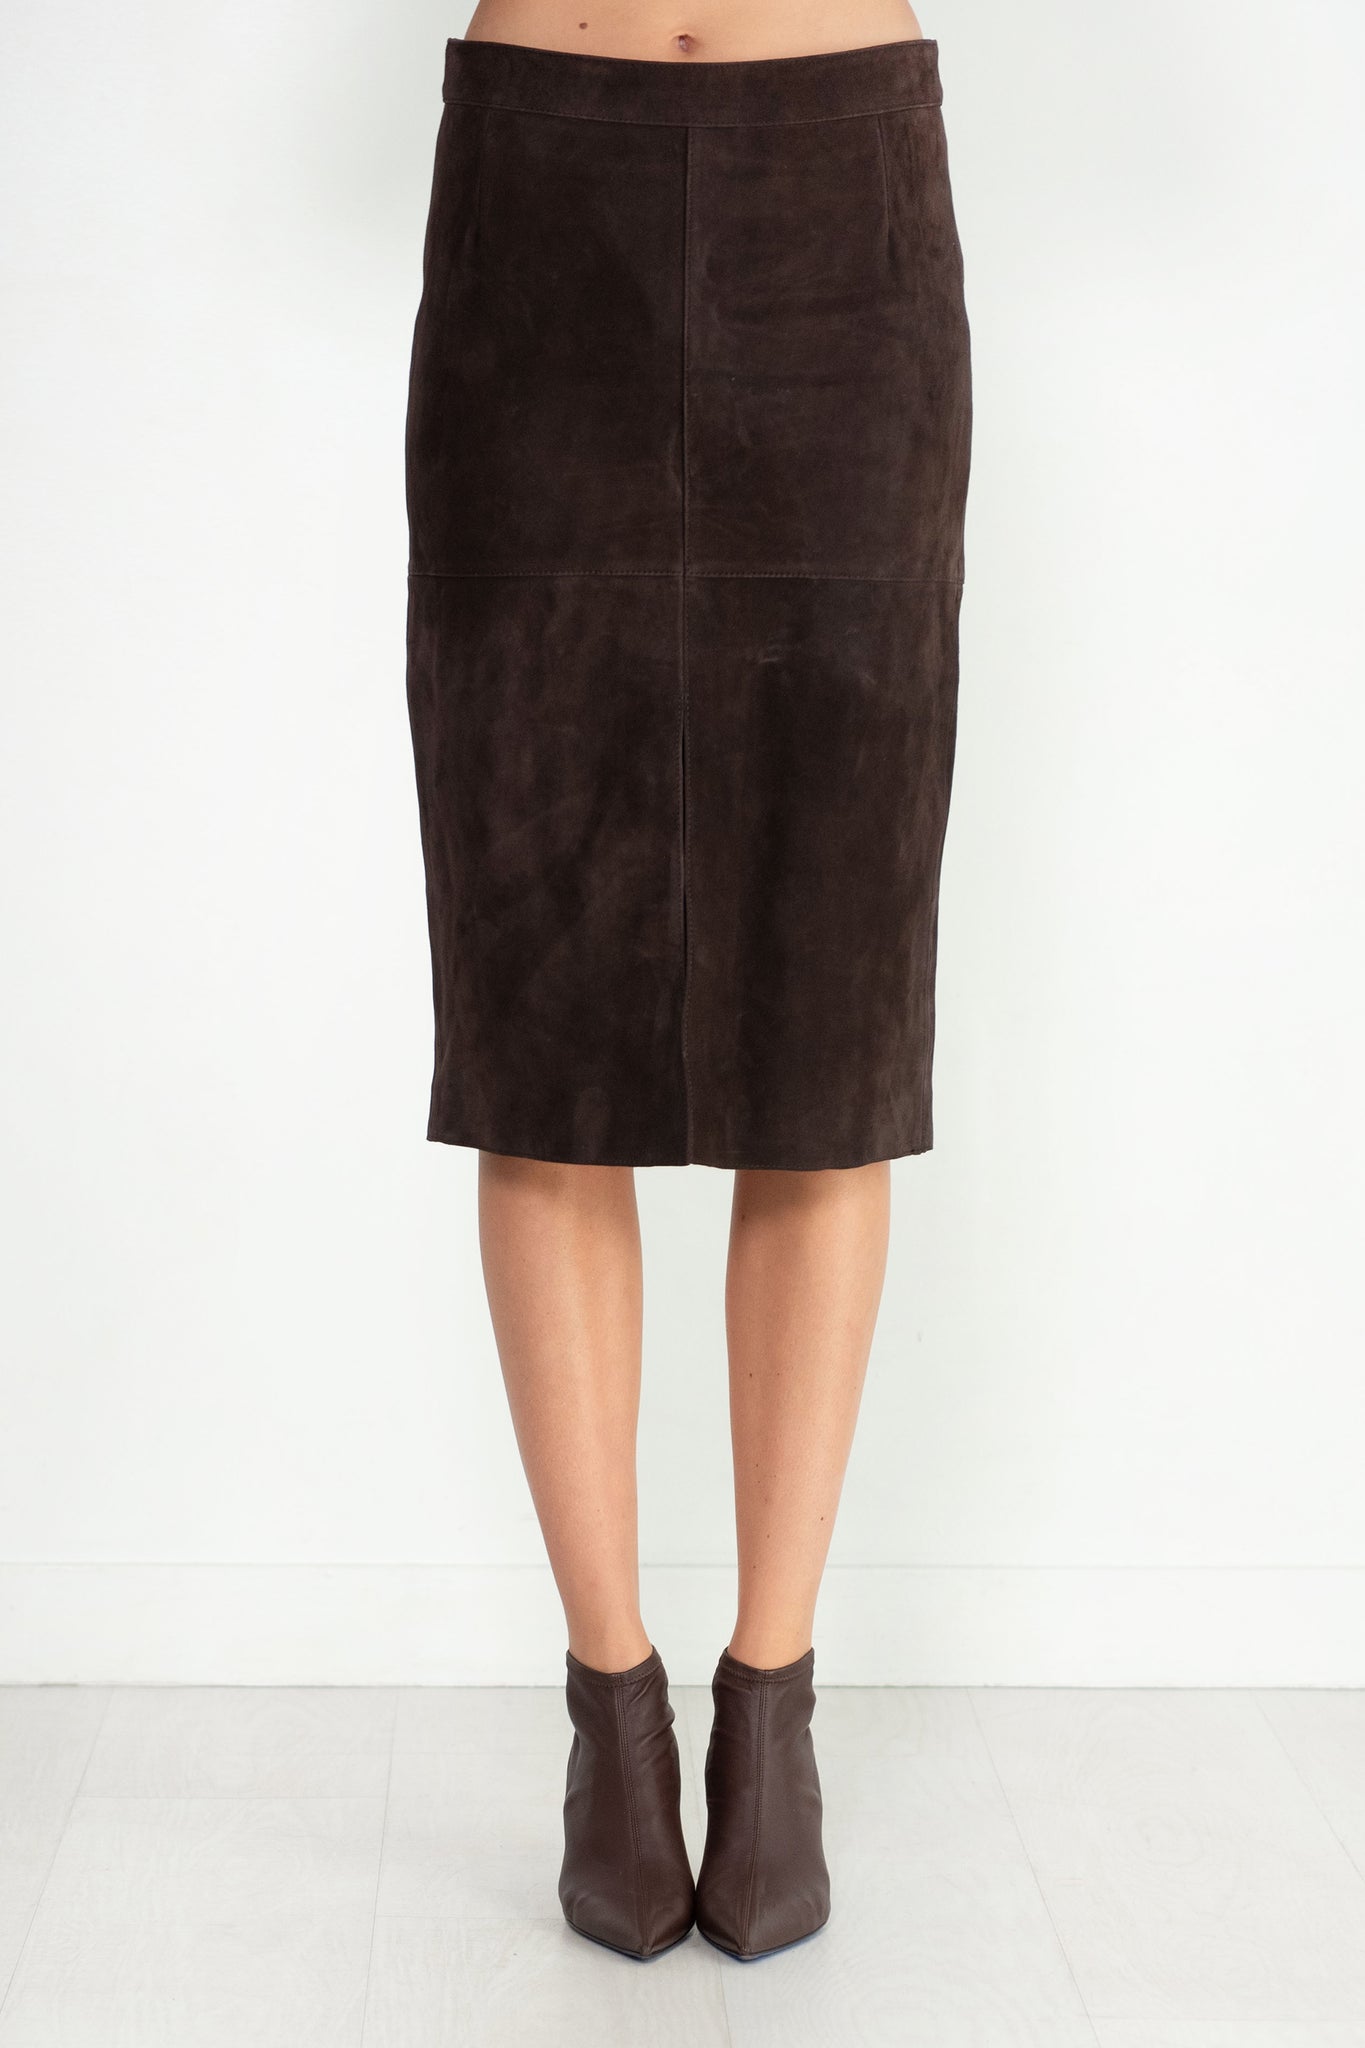 TOTEME - Paneled Suede Skirt, Chocolate